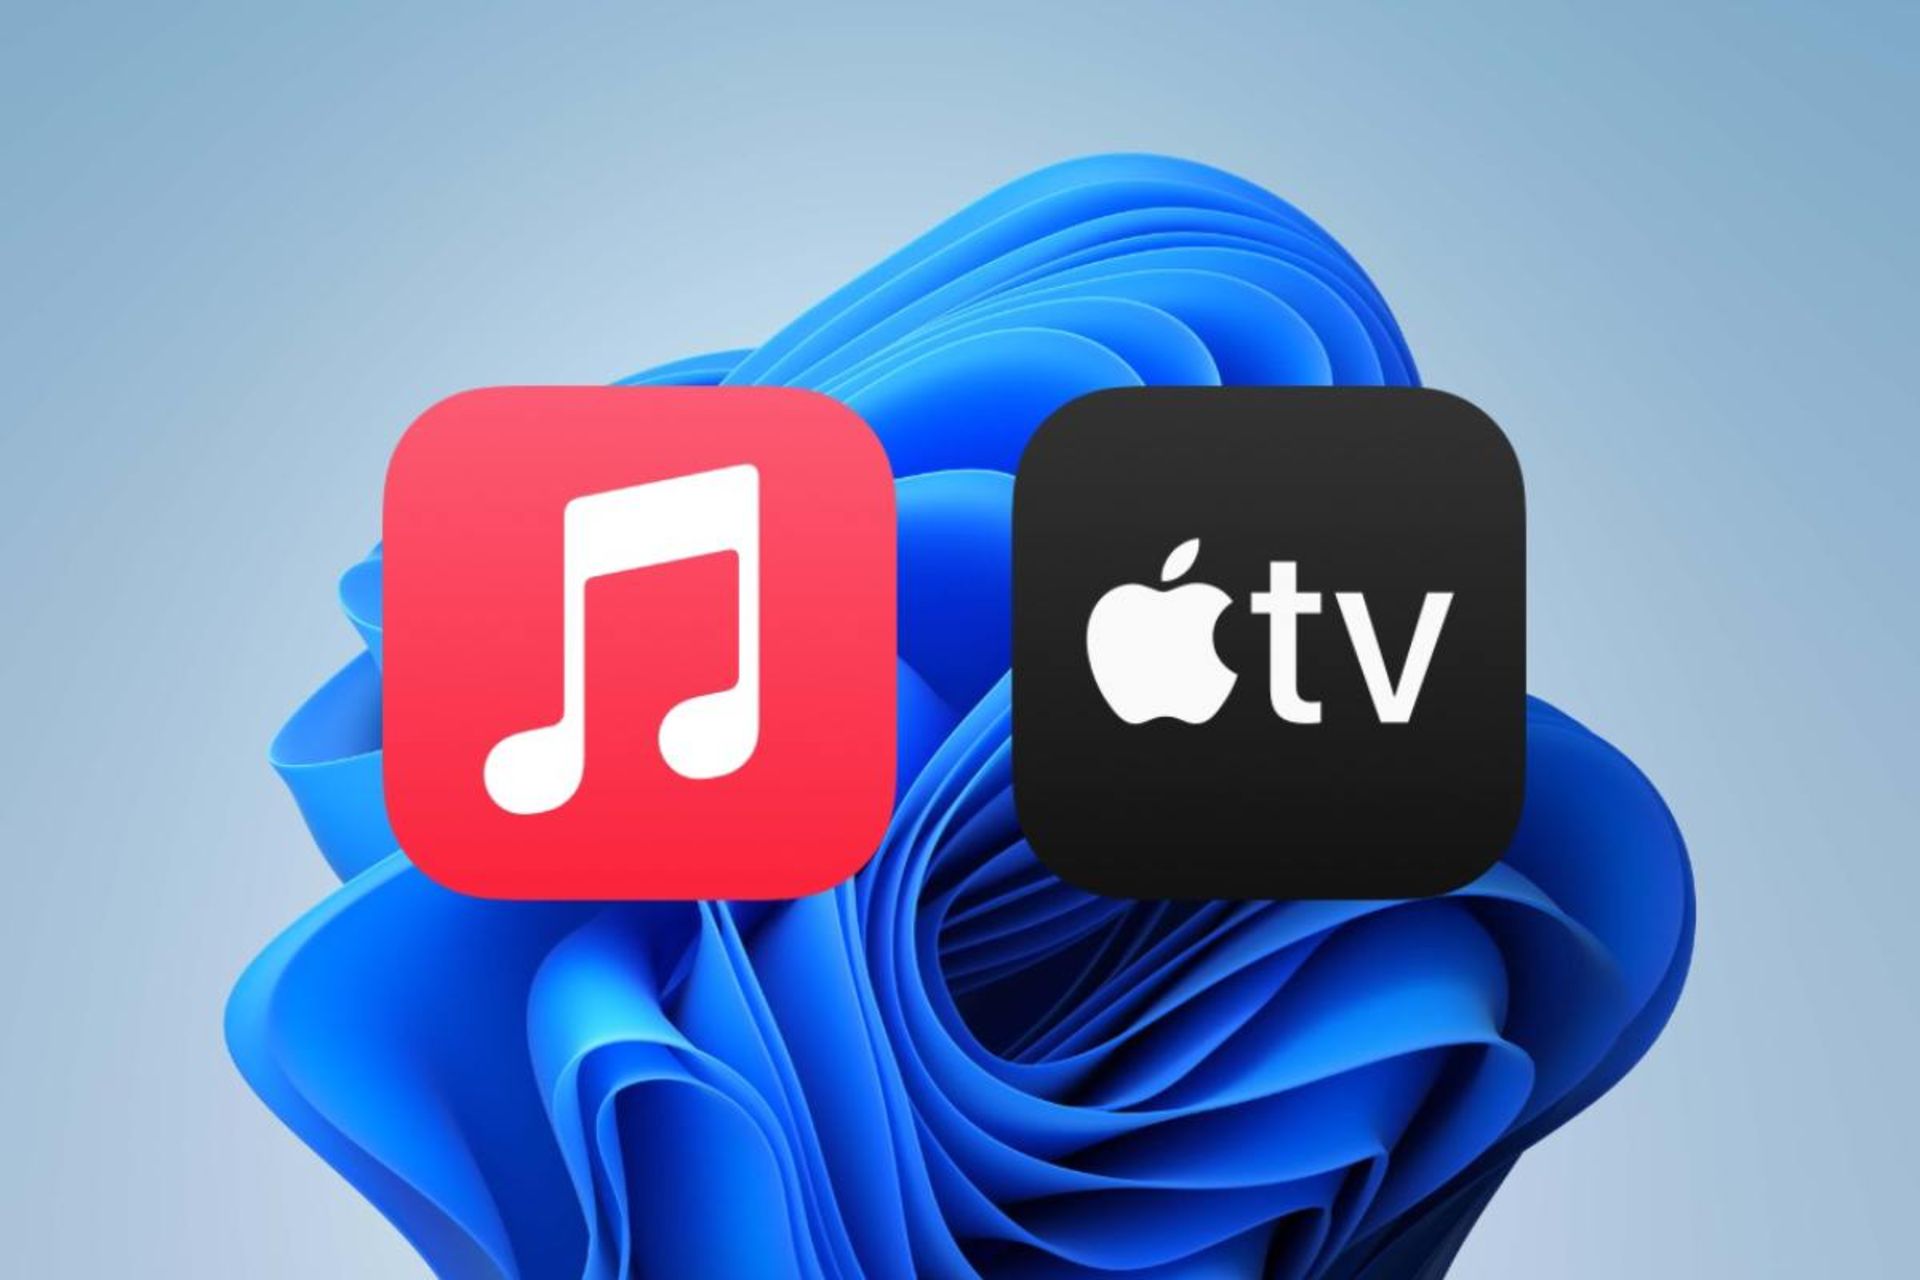 اپل موزیک و اپل تی وی ویندوز